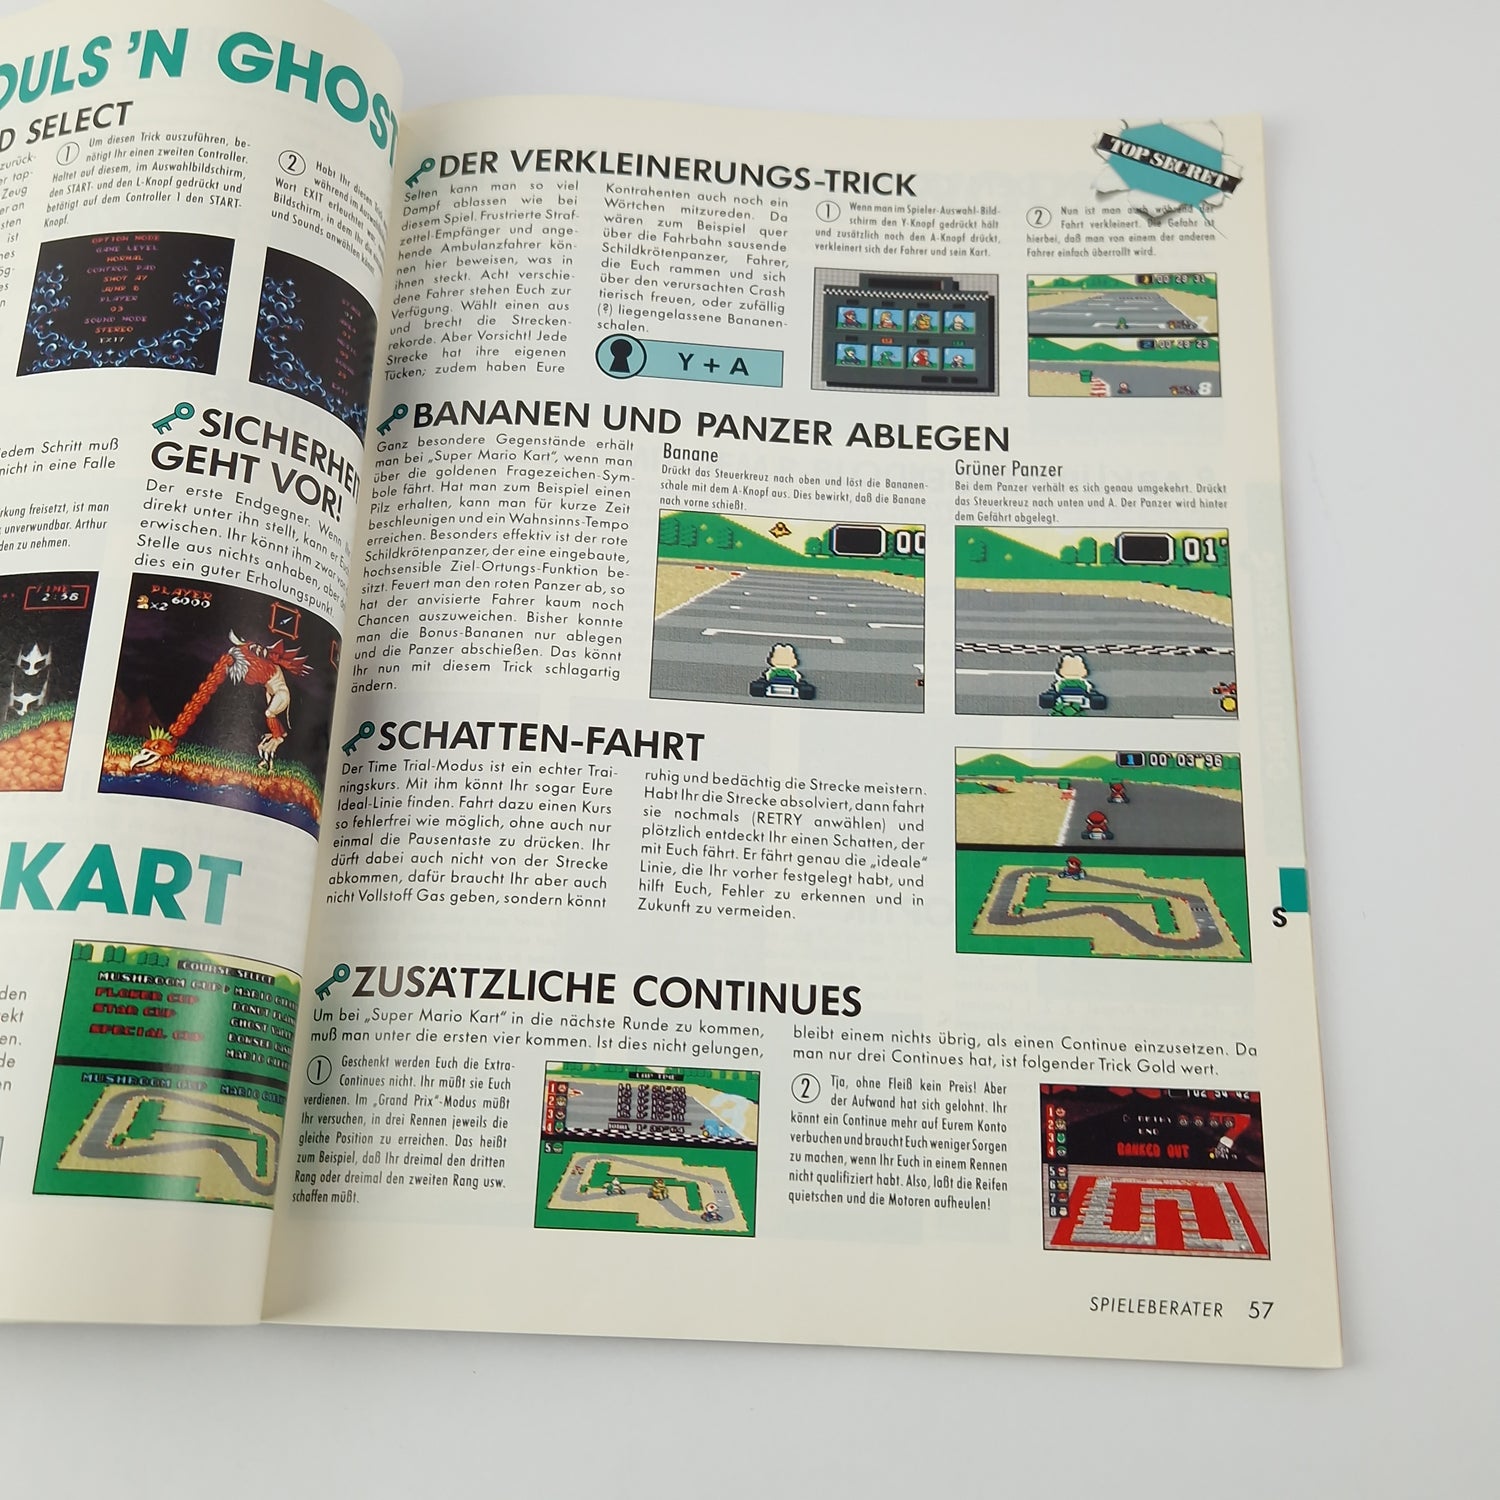 Der offizielle Nintendo Spieleberater : TOP SECRET - Lösungsbuch SNES Book Guide